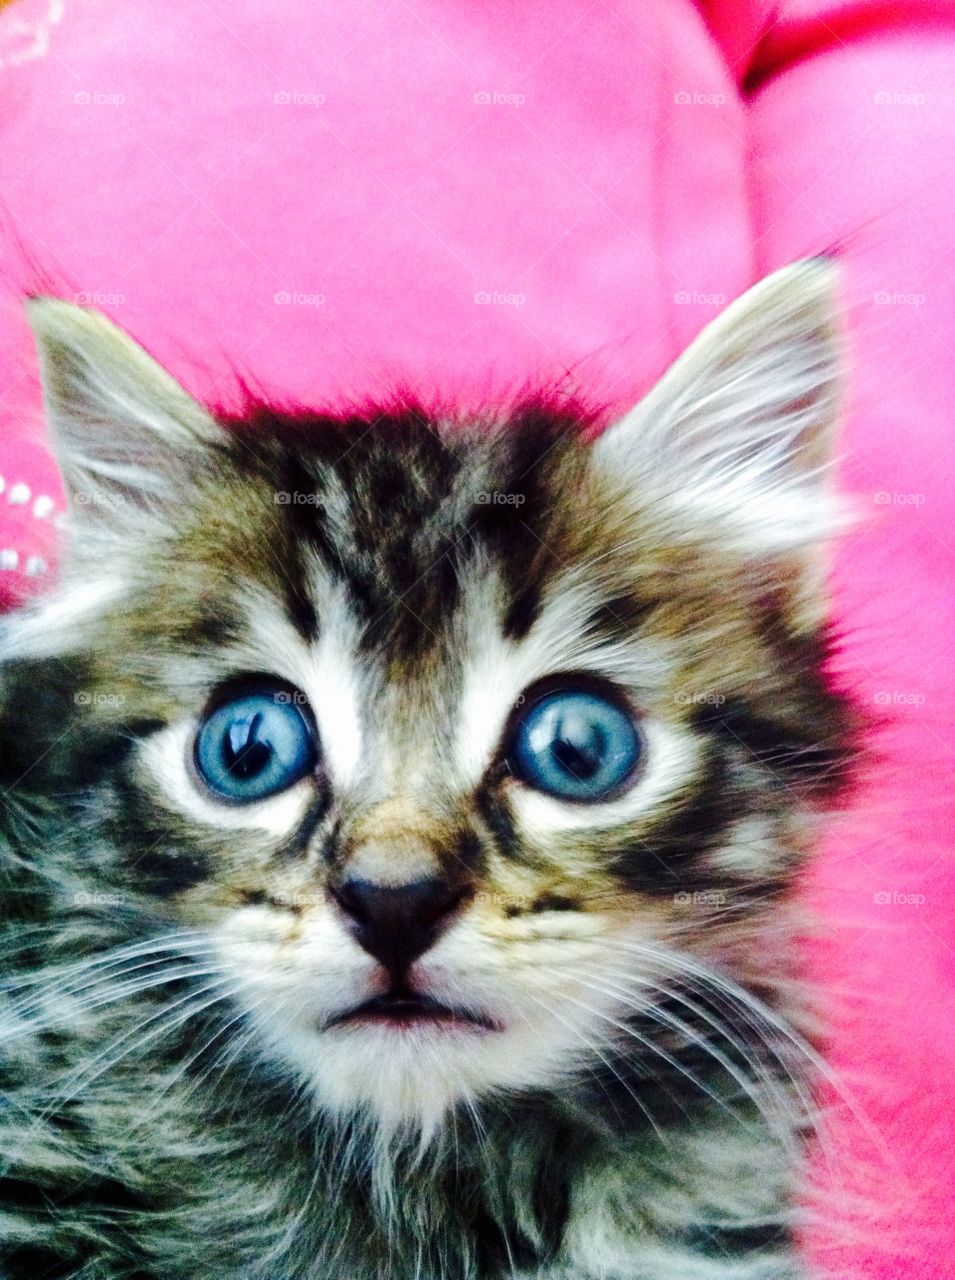 Purrty kitty . Sweet blue eyed kitten posing for camera 